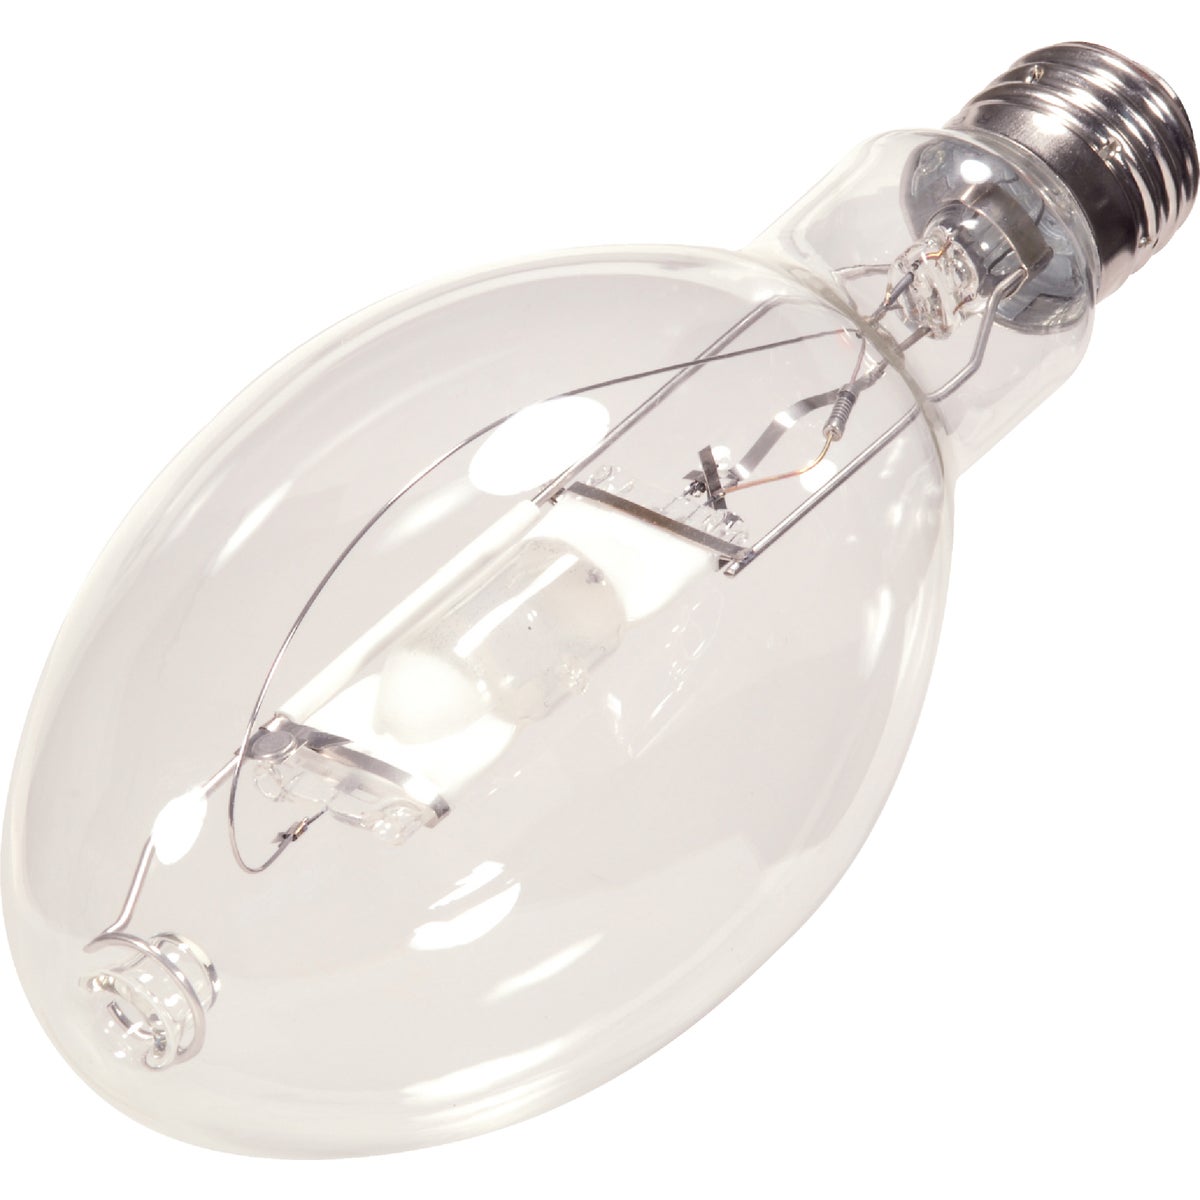 Item 557285, ED37 metal halide HID (high-intensity discharge) light bulb with mogul base